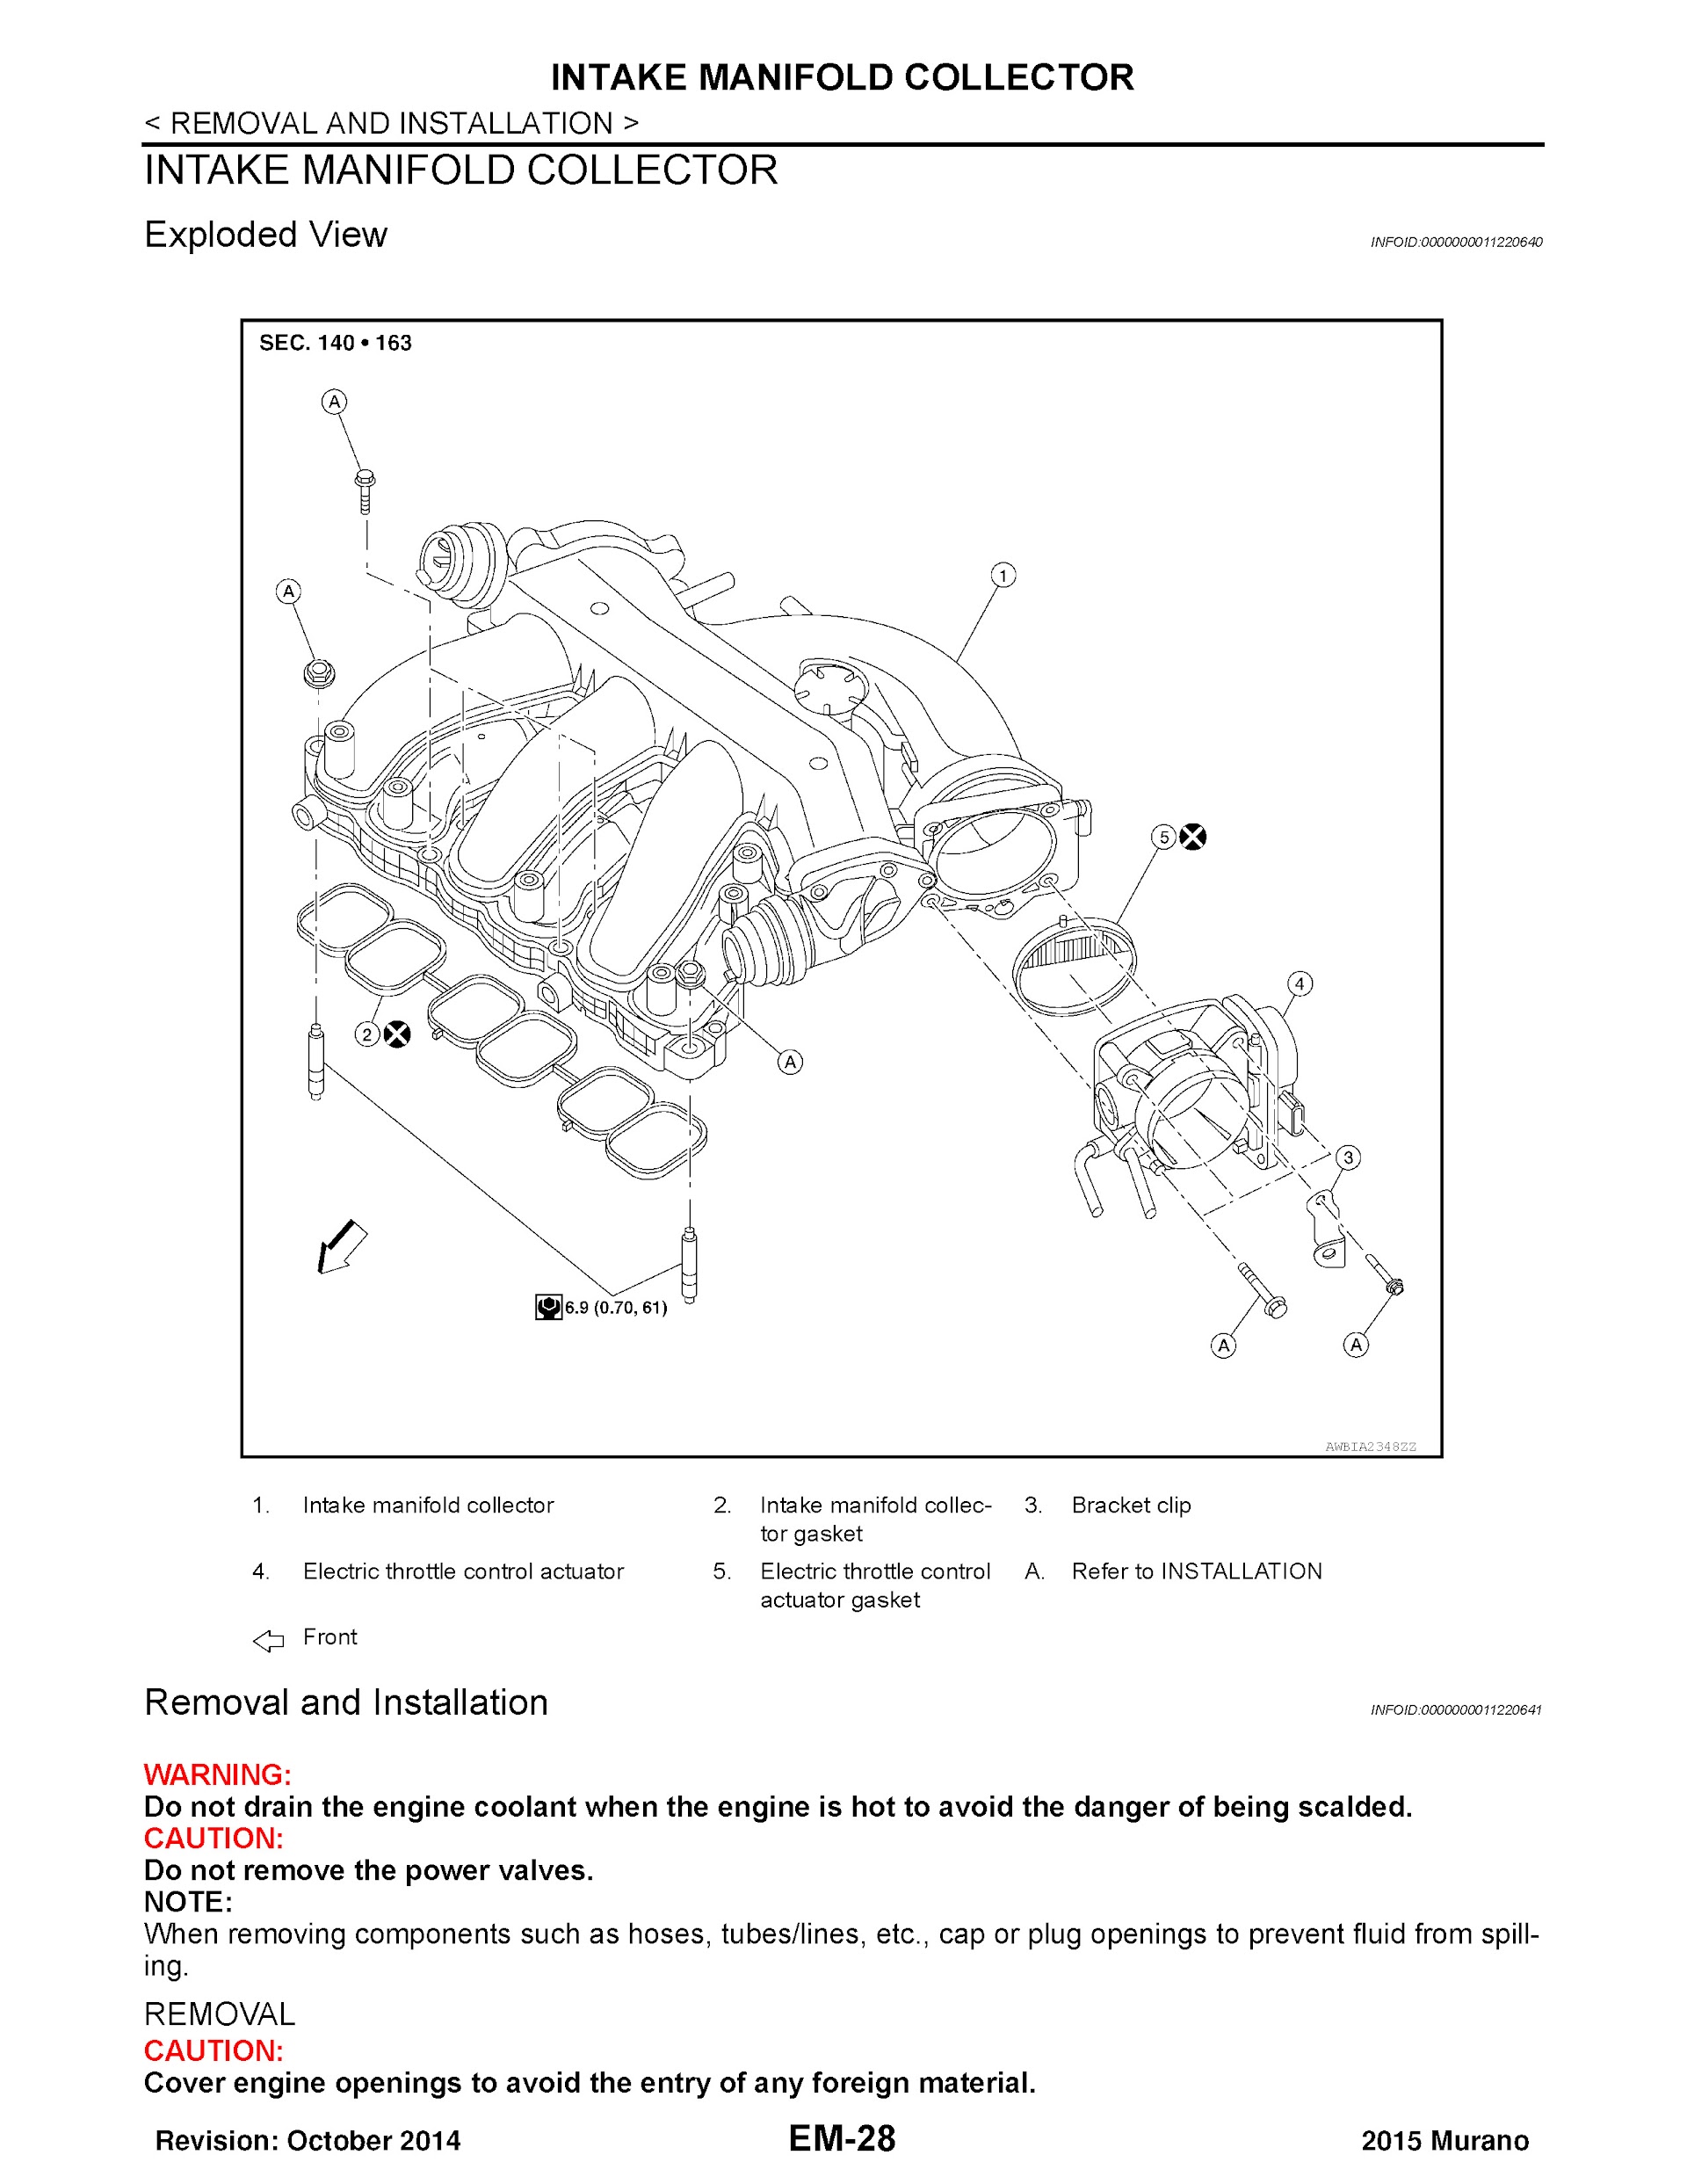 2015 Nissan Murano Repair Manual, Intake Manifold Removal and Installation